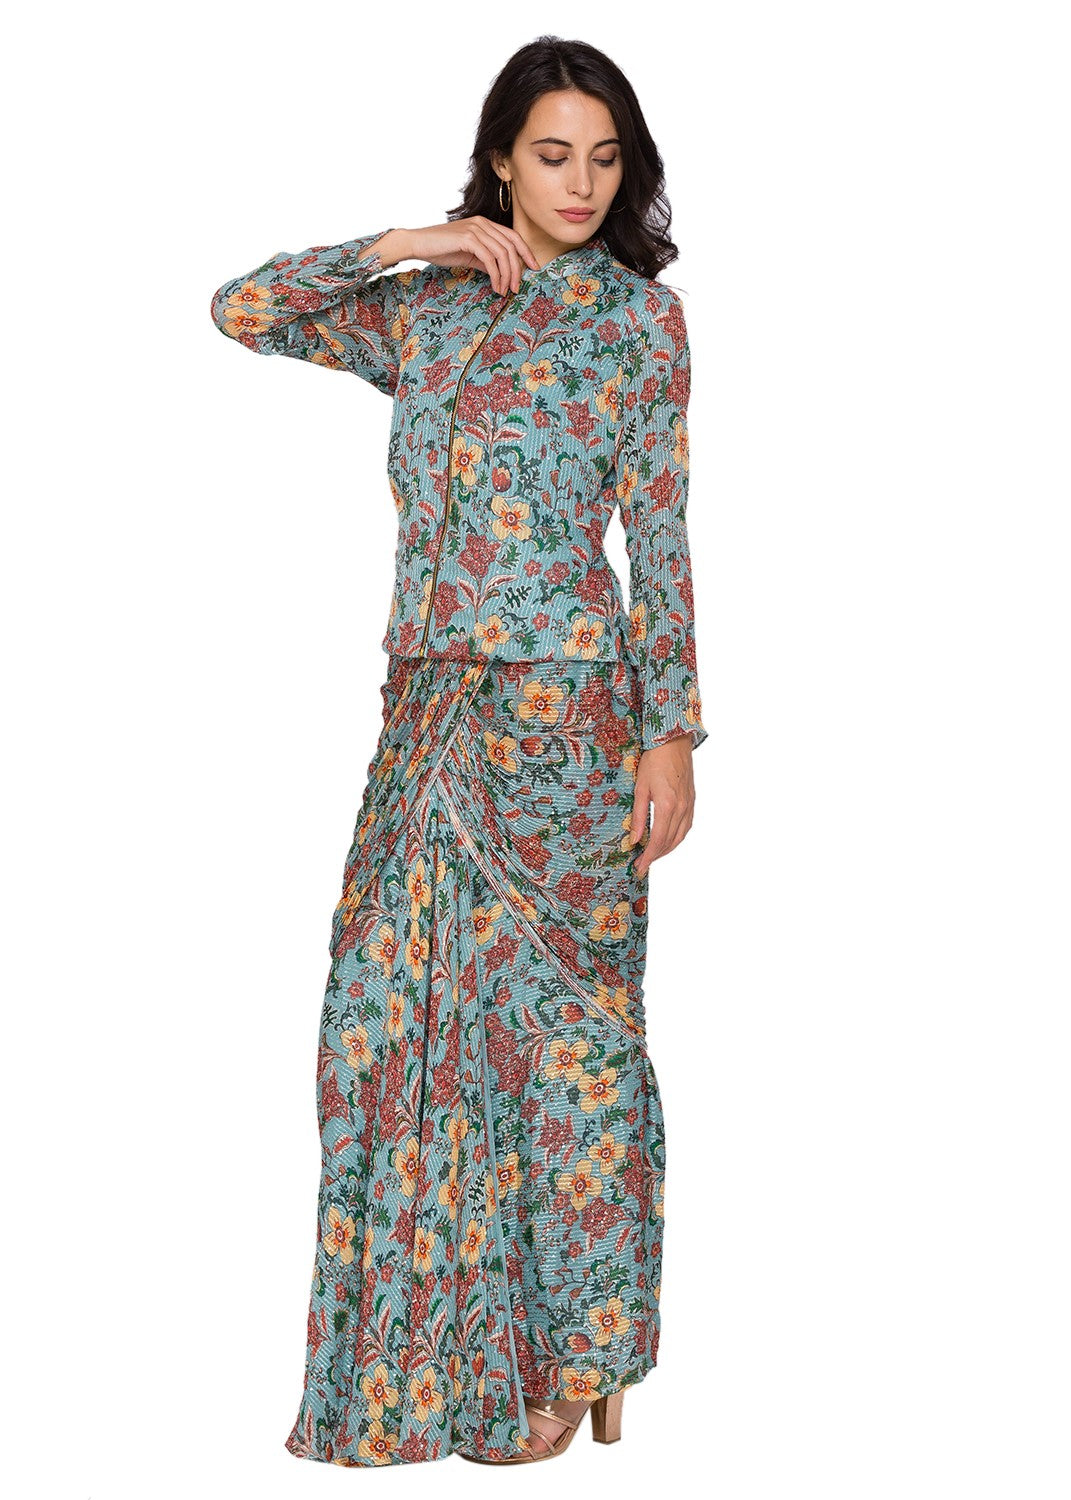 sougat paul Printed Drape Skirt And Jacket green fusion indian designer wear online shopping melange singapore